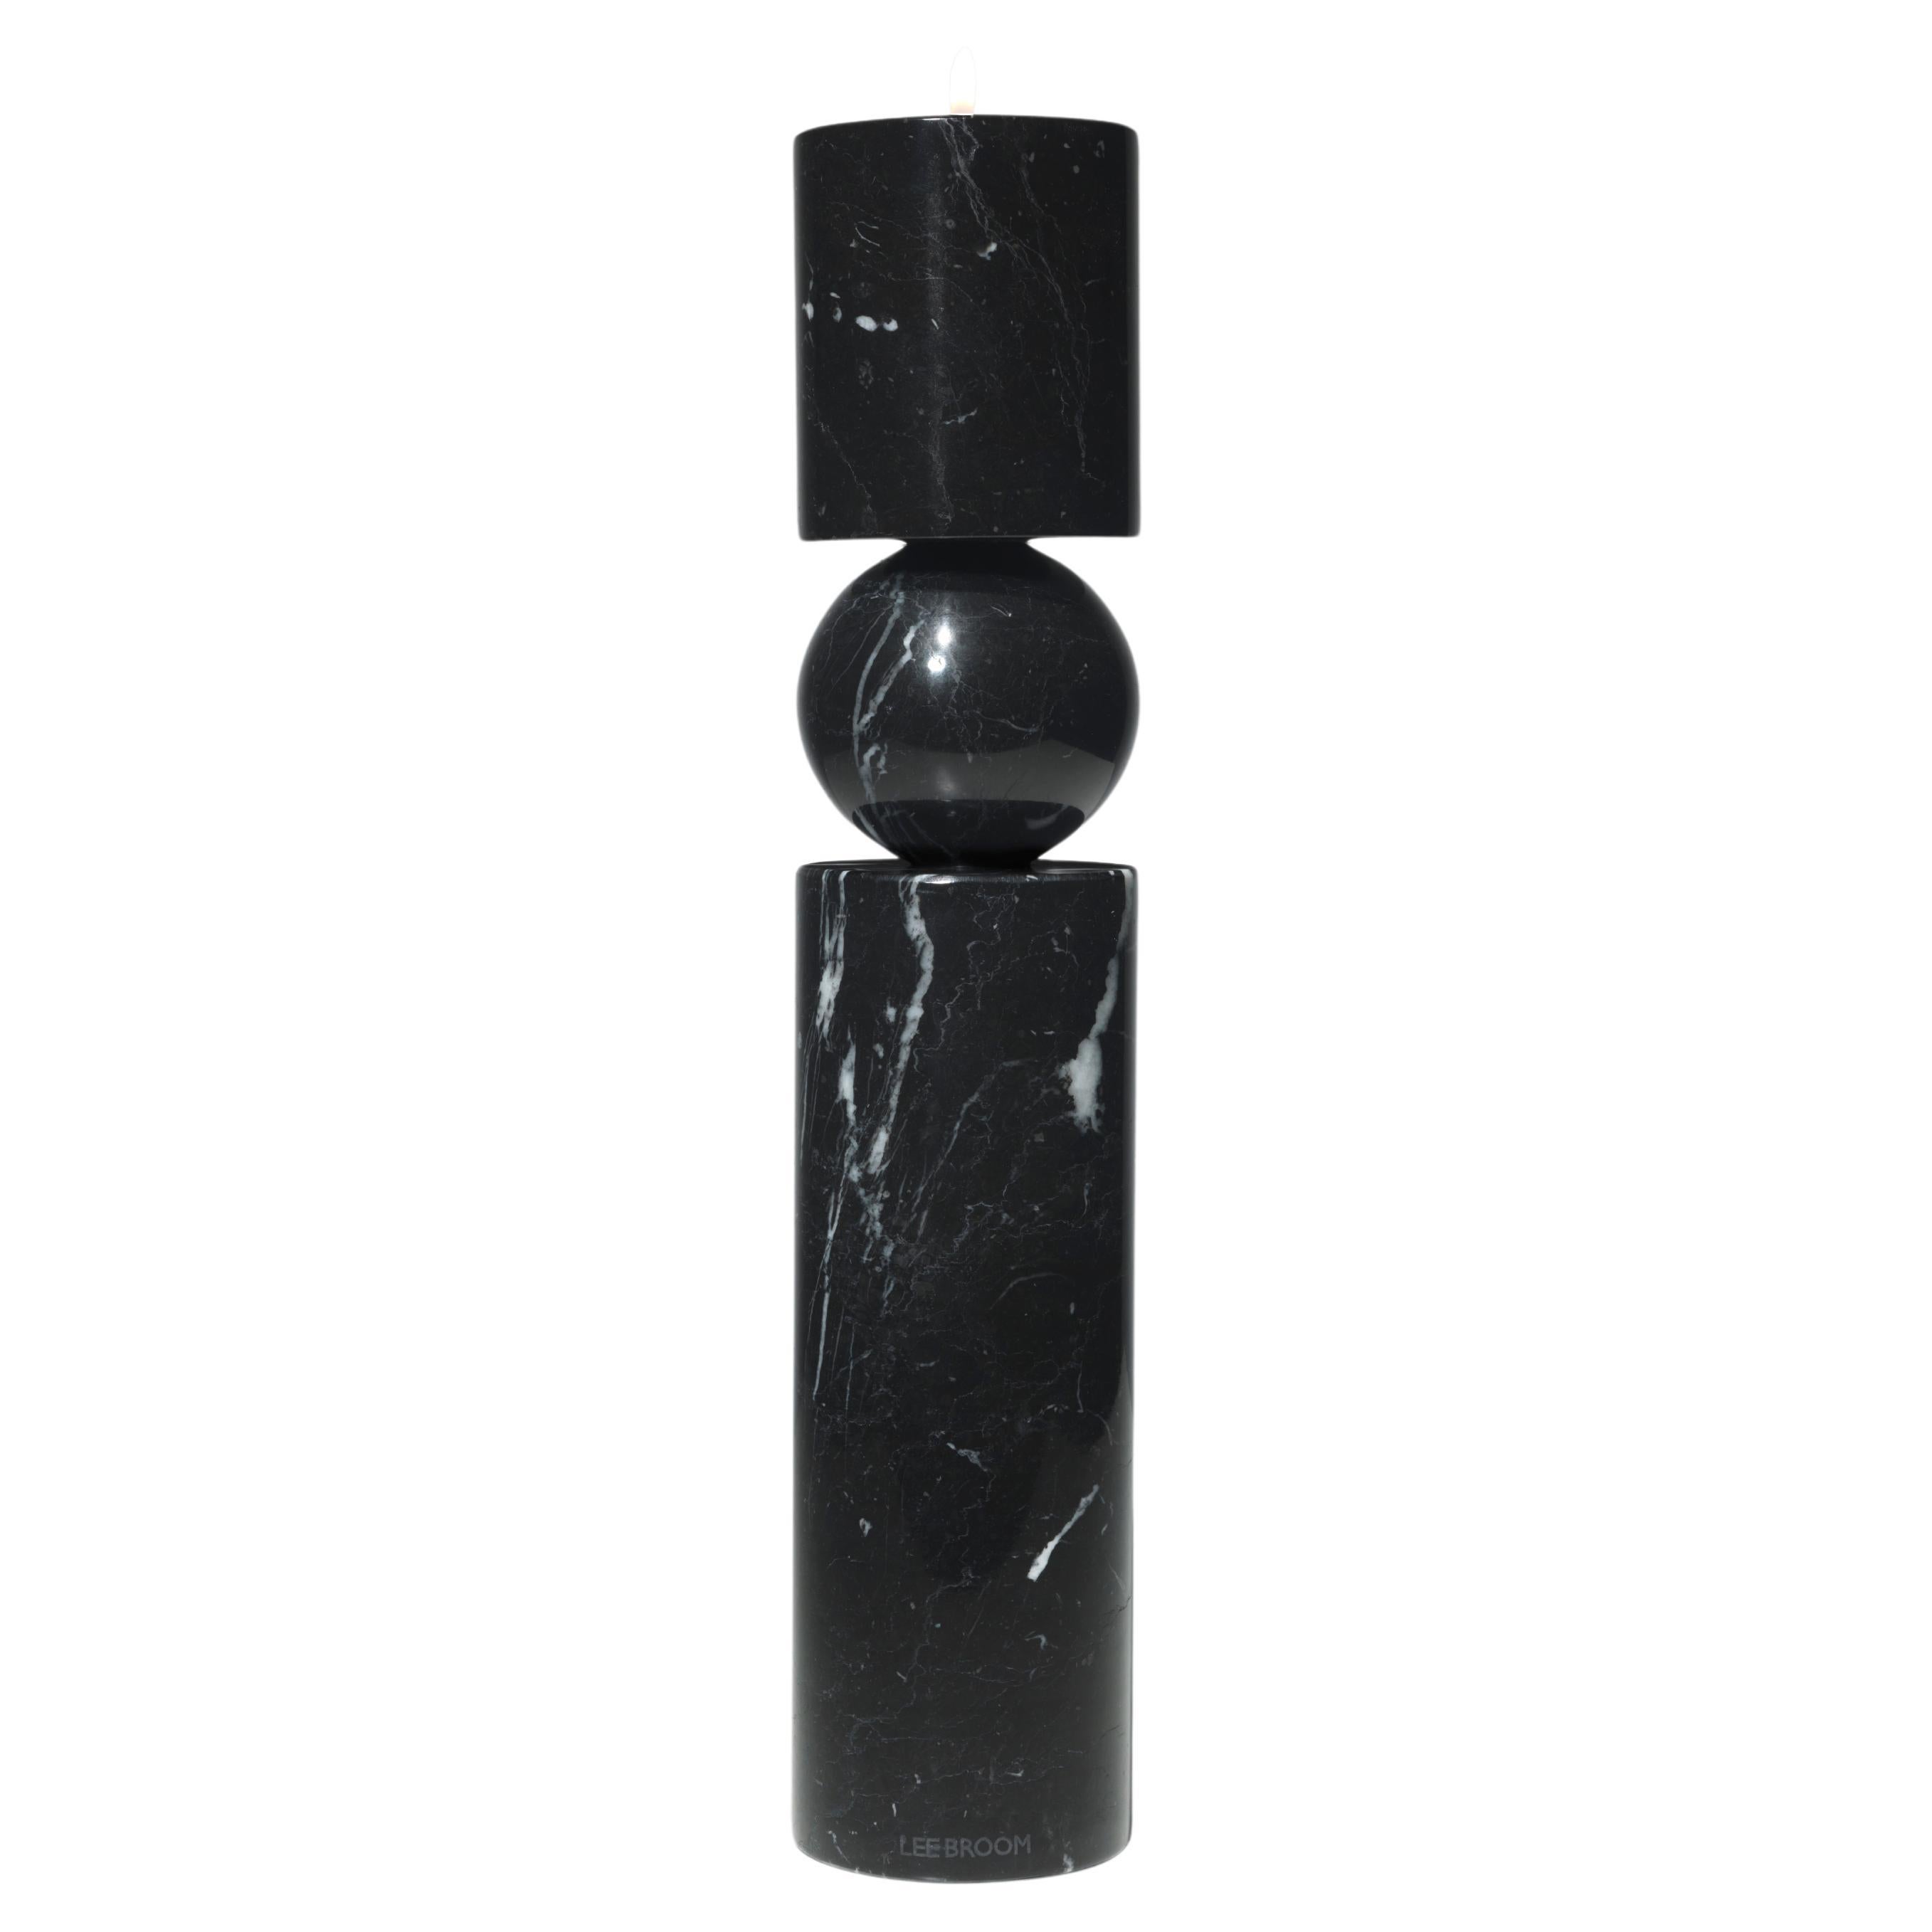 Lee Broom - Fulcrum Candlestick Black Marble - Large